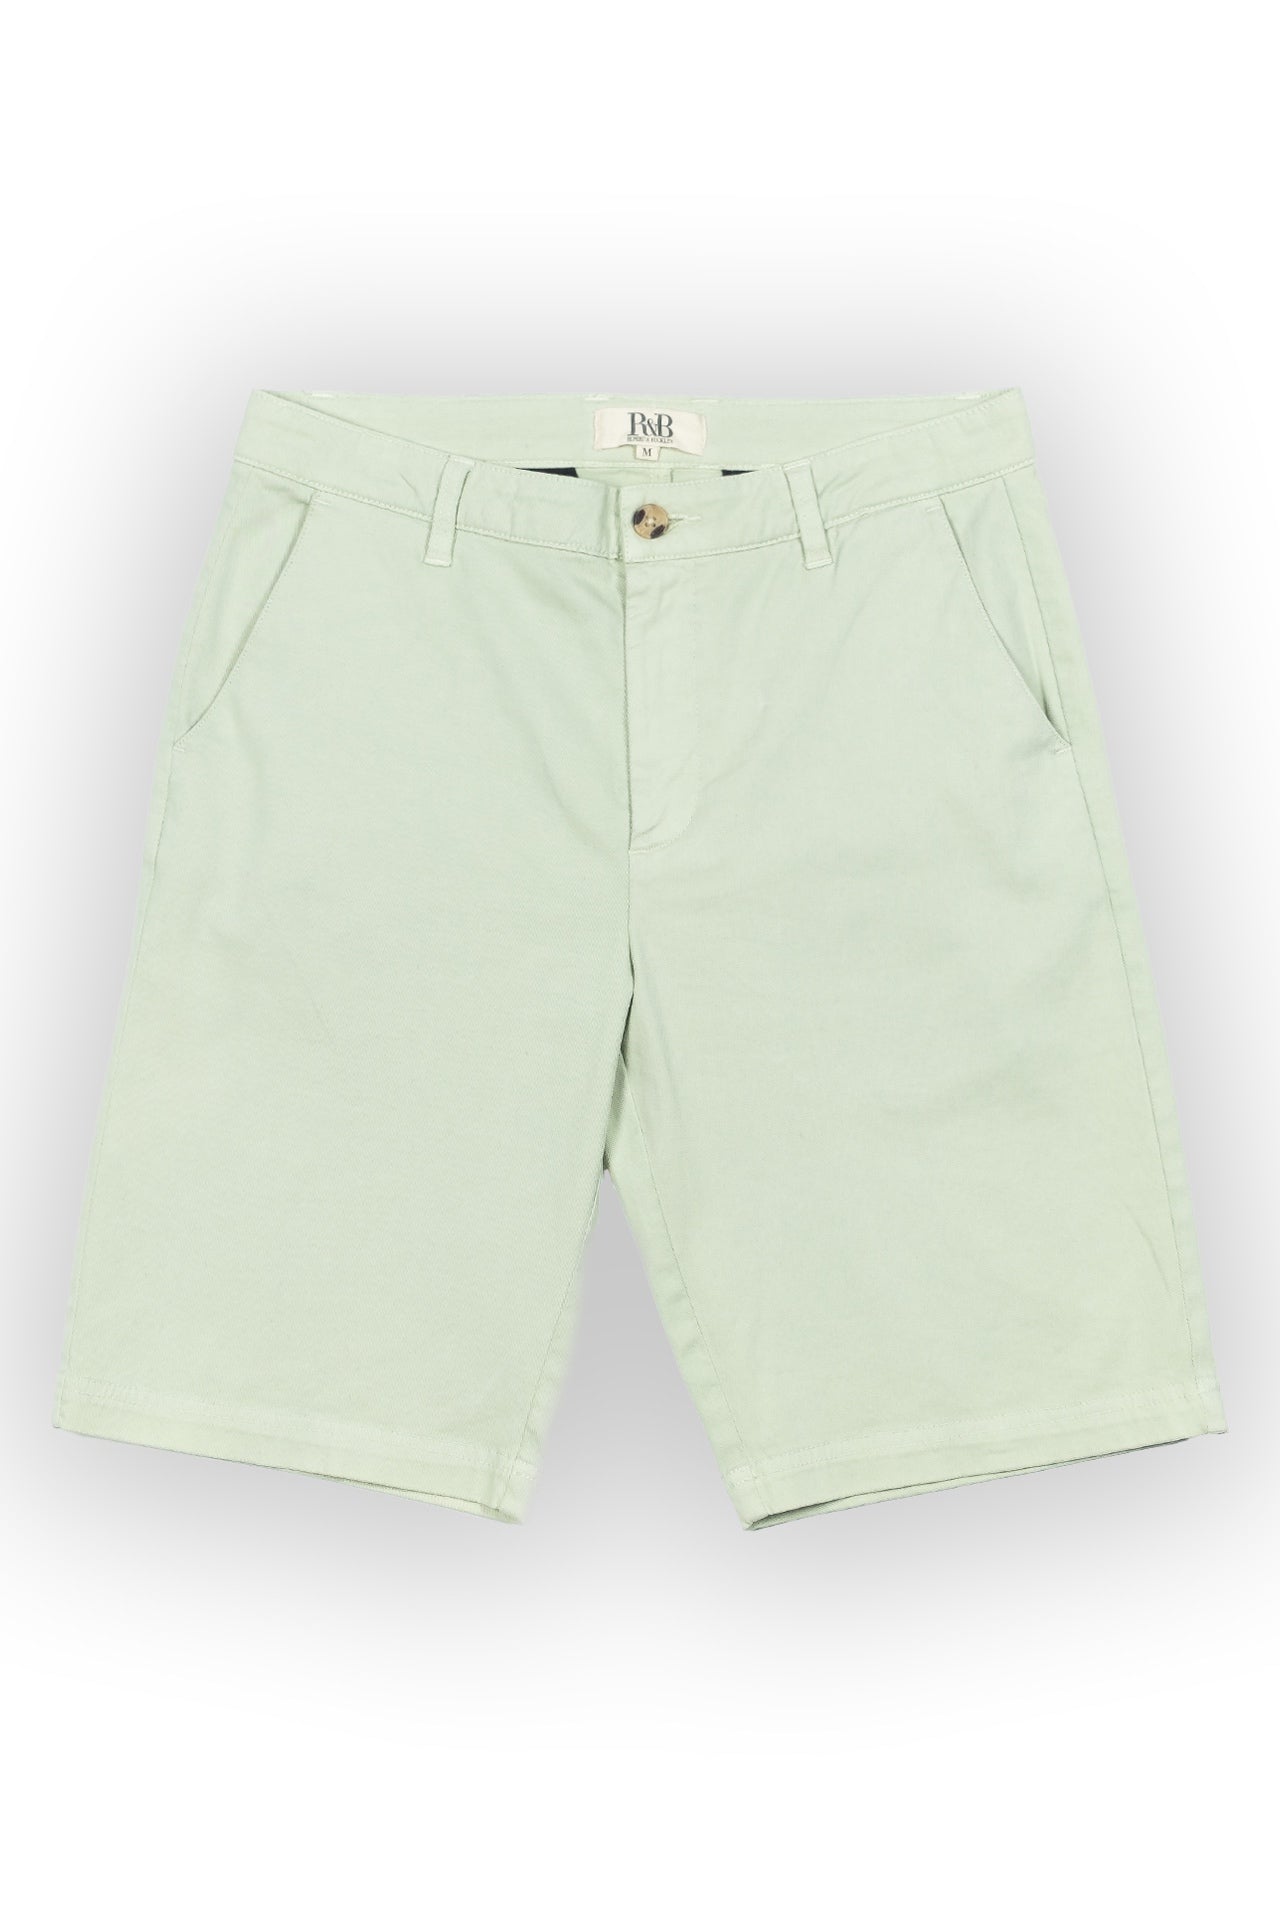 Spencer Green Chino Shorts - Rupert and Buckley - Shorts